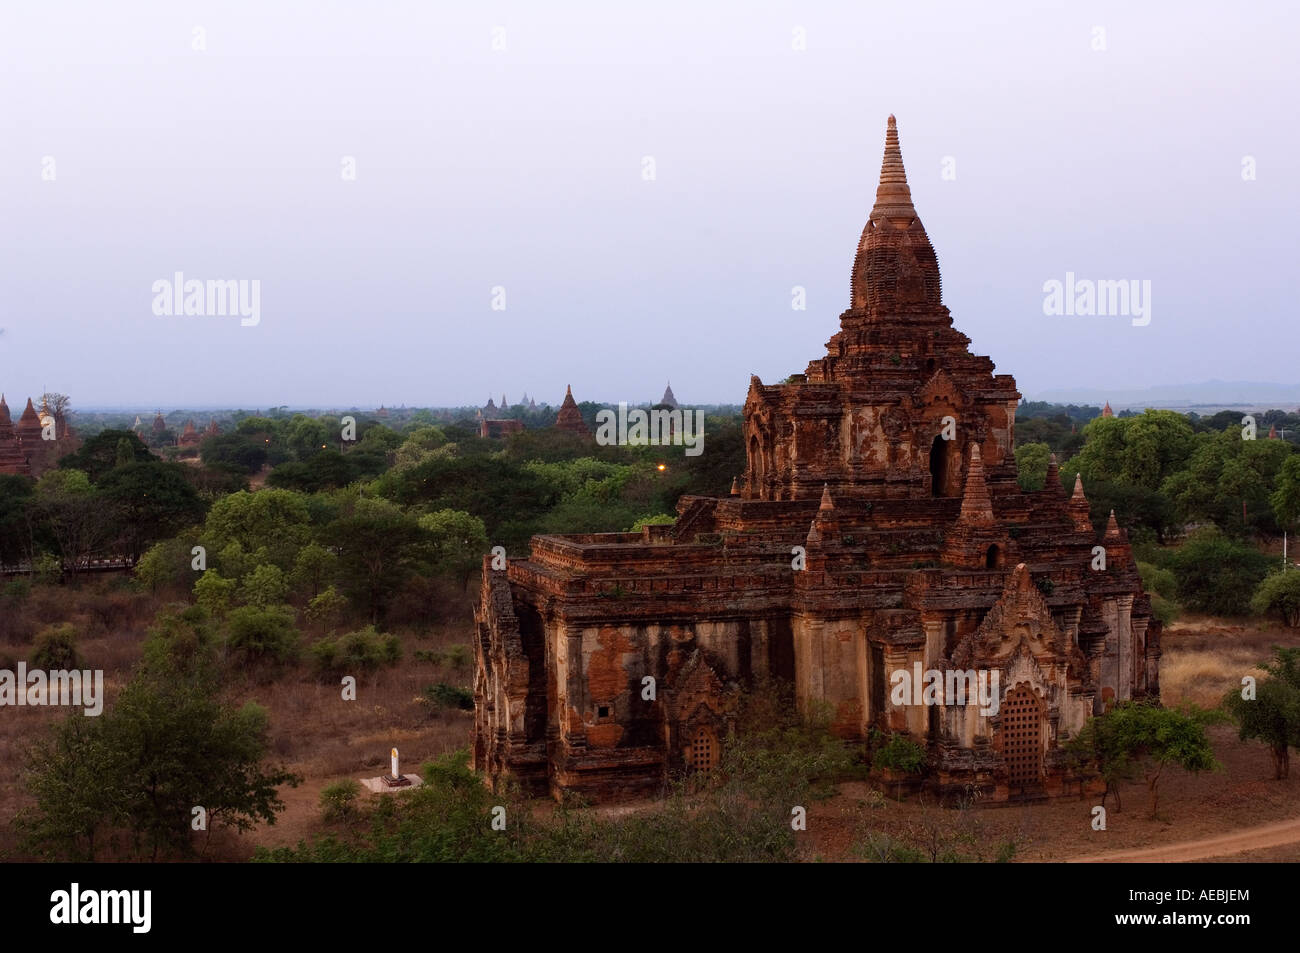 The beautiful people and scenery of Myanmar Burma in 2006 Stock Photo